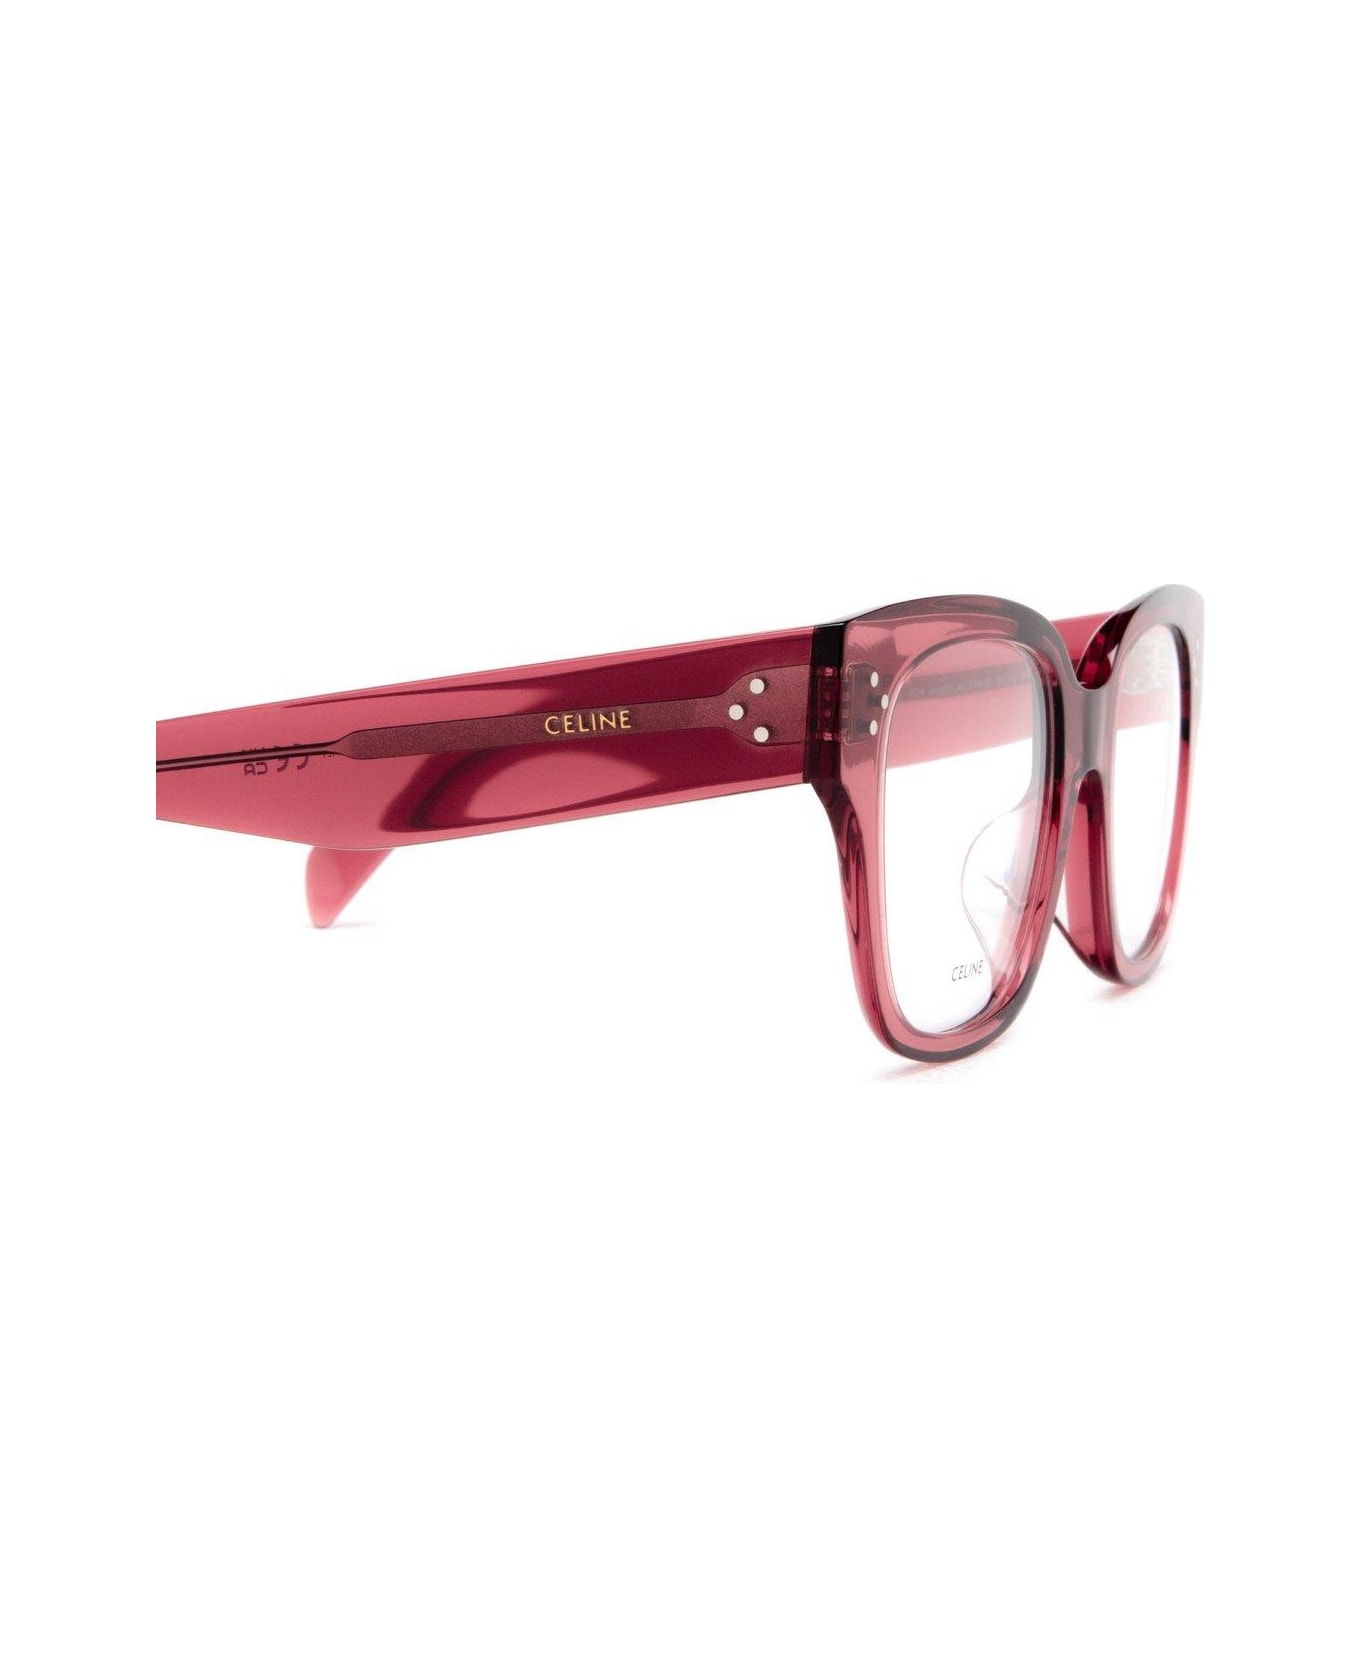 Celine Squared Frame Glasses - 074